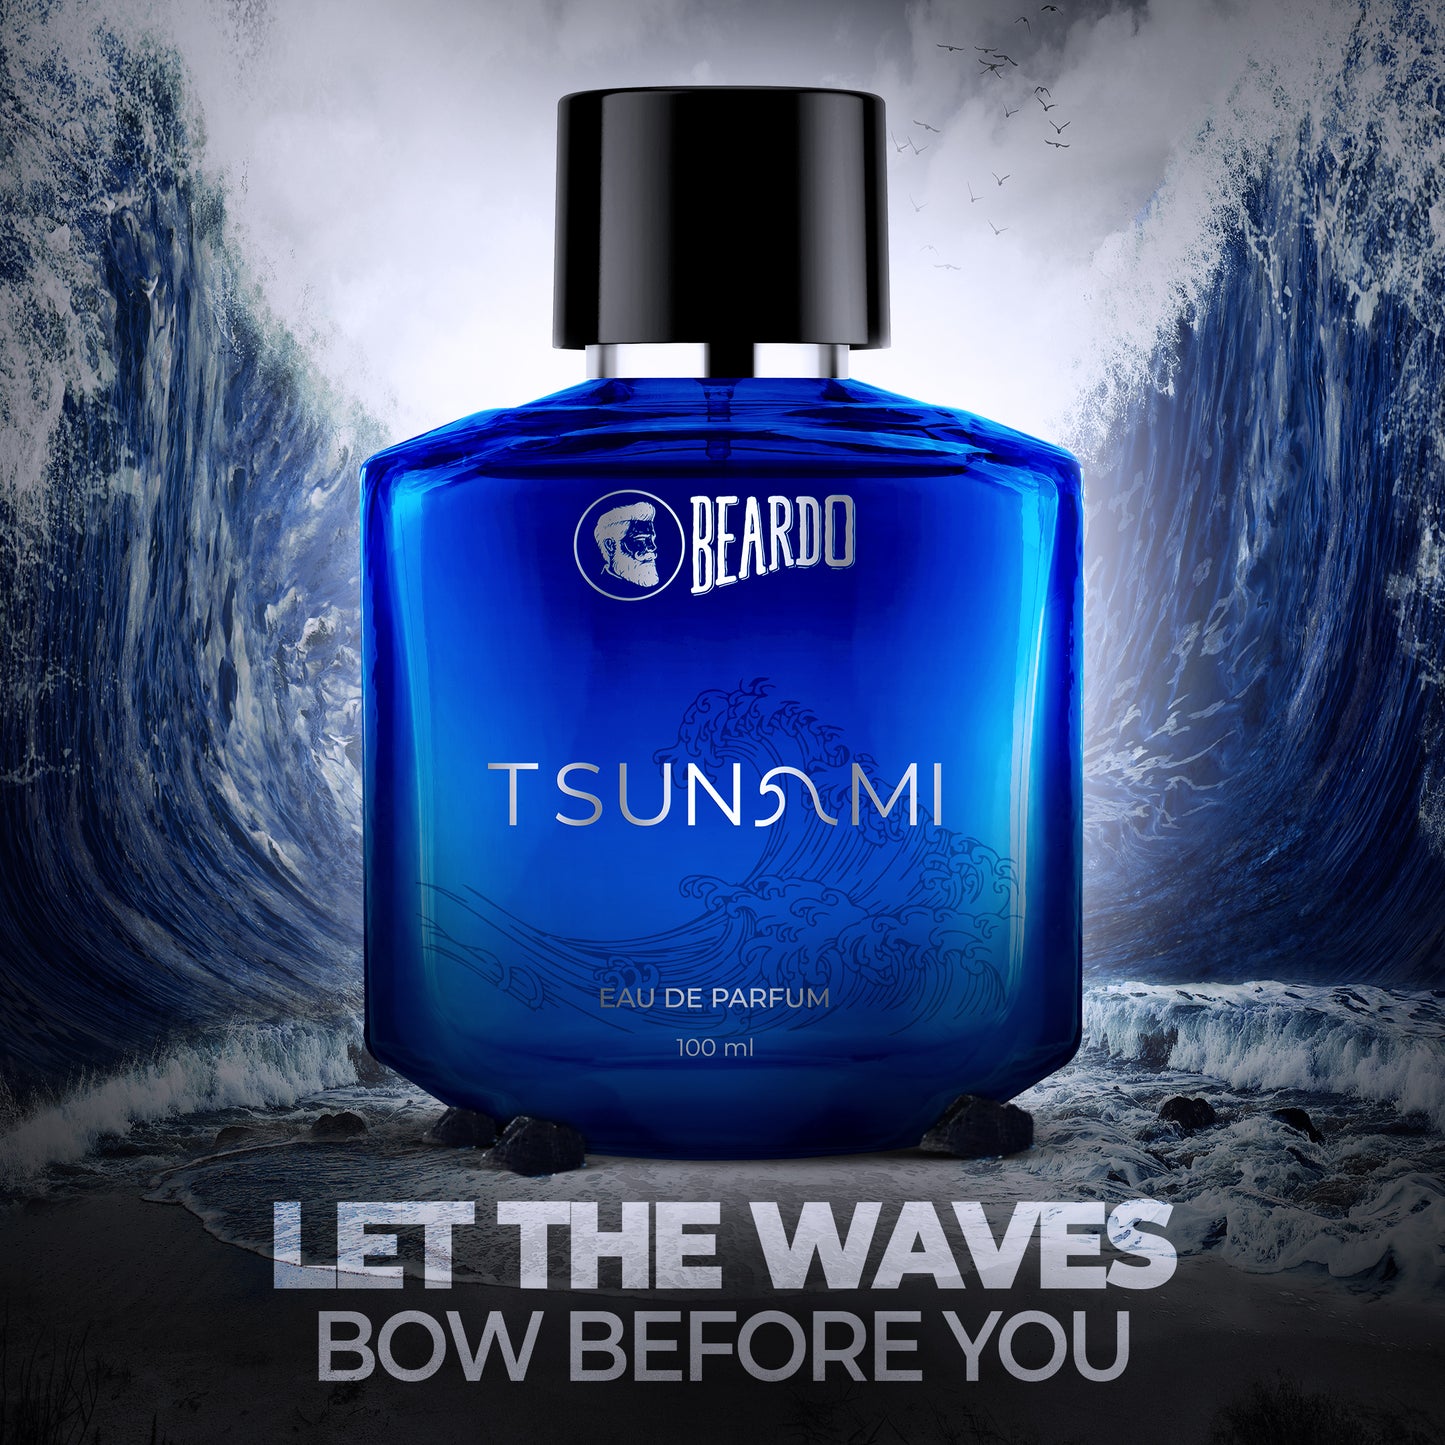 Beardo Whisky Smoke Single Malt & Tsunami Perfume EDP Combo